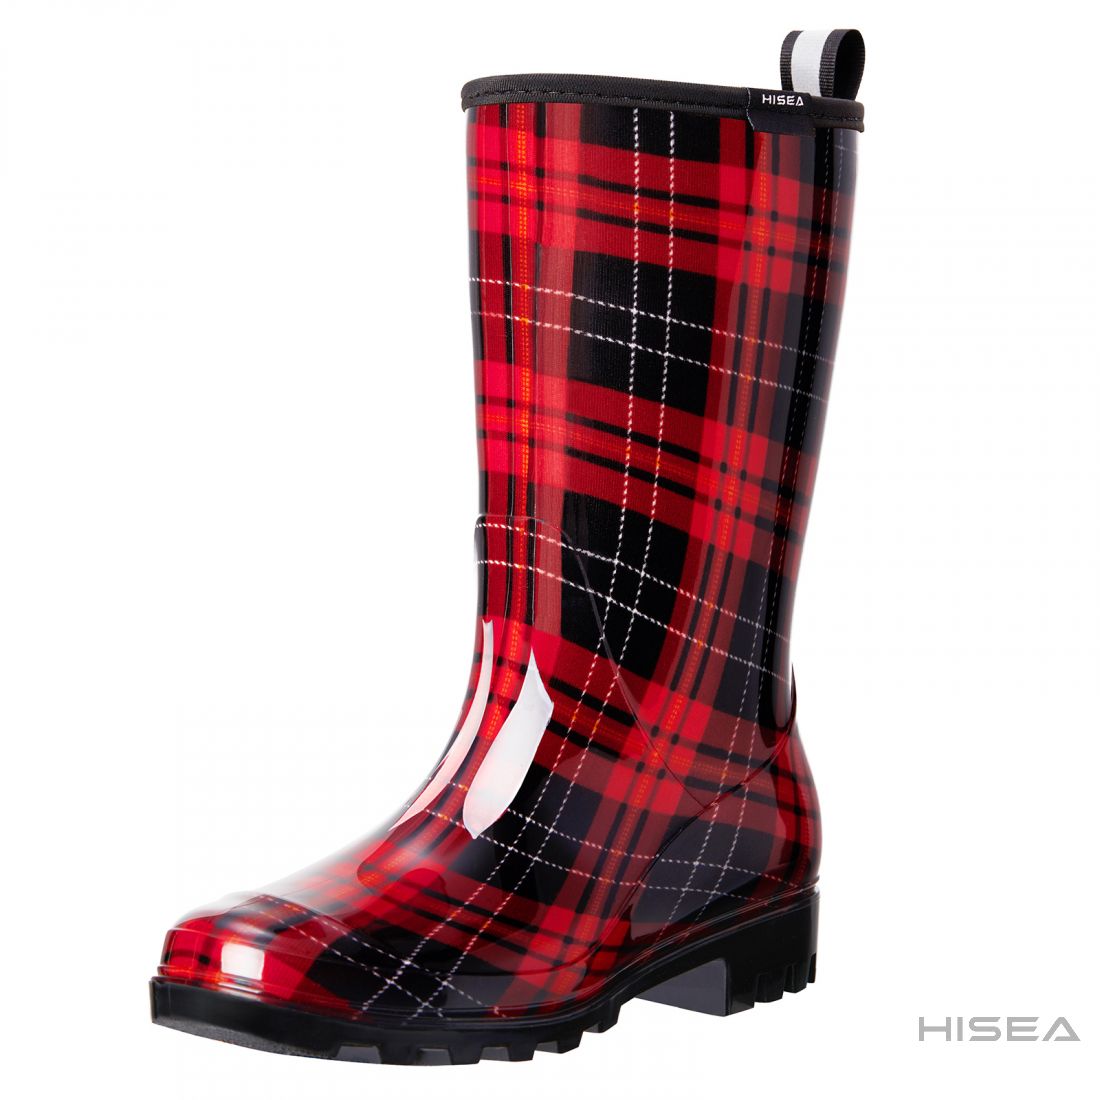 Women's Waterproof Mid-Calf Rain Boots | HISEA